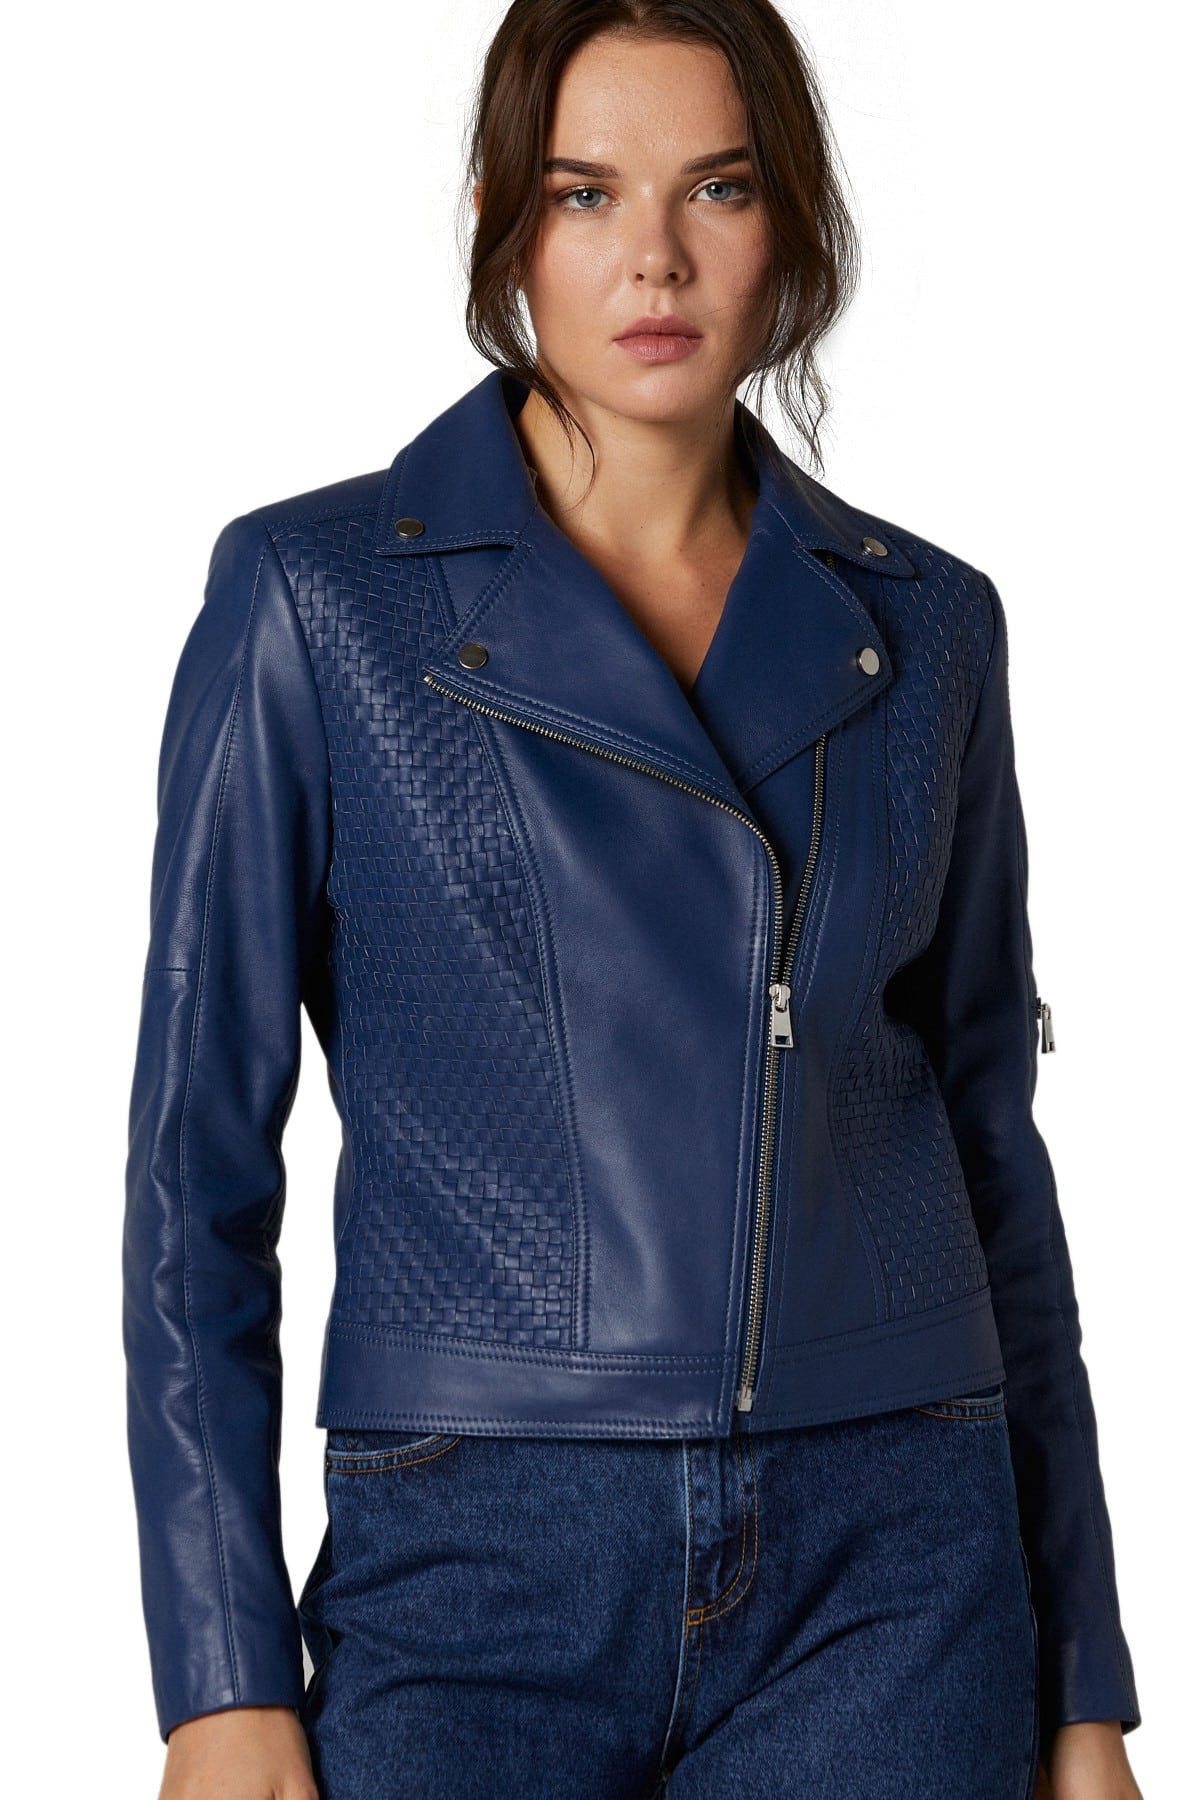 Barbara Palvin Women's 100 % Real Navy-Blue Leather Modern Jacket